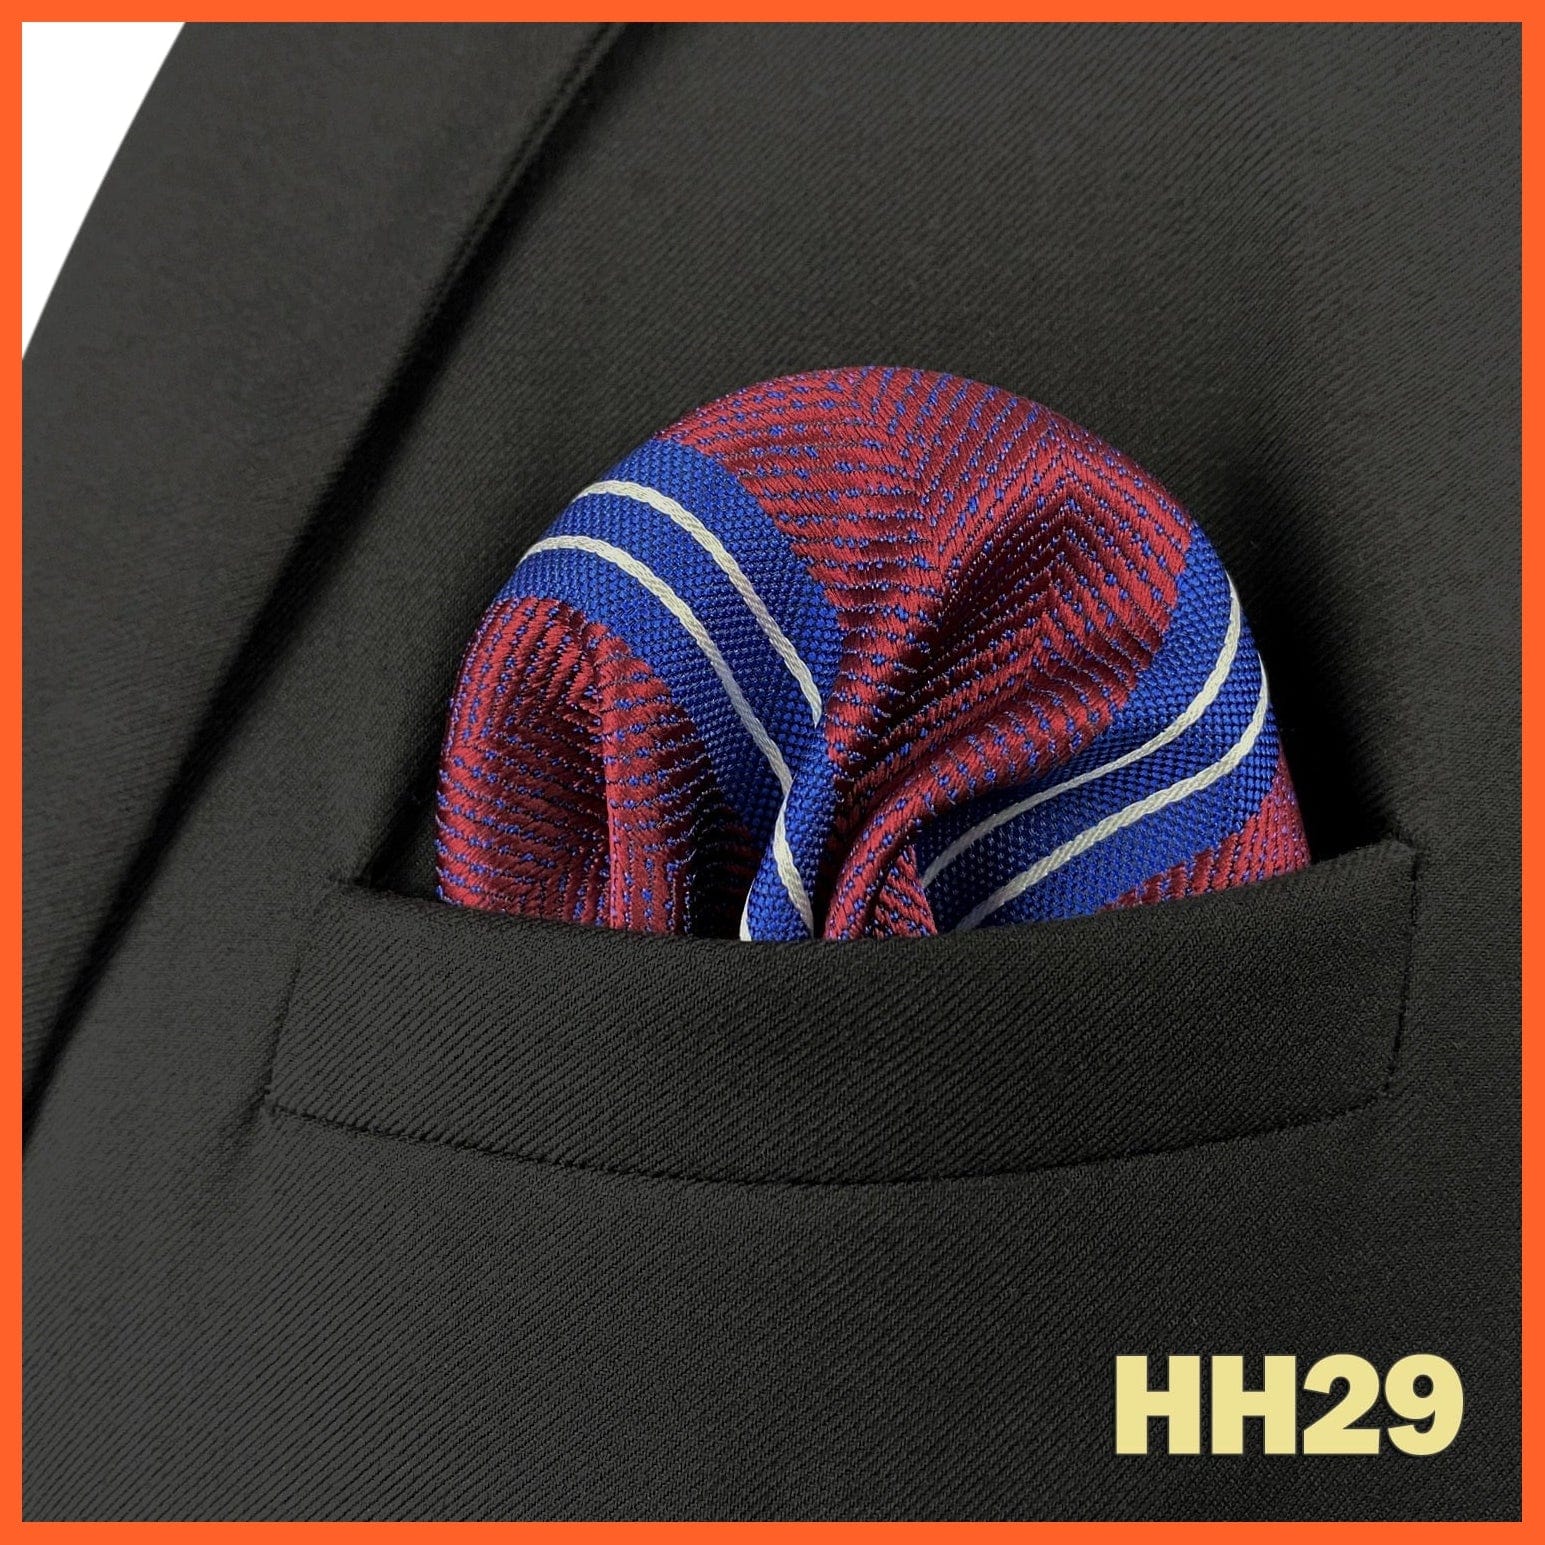 whatagift.com.au Handkerchief HH29 Colorful Multicolor Pocket Square Men's Classic Striped Handkerchief